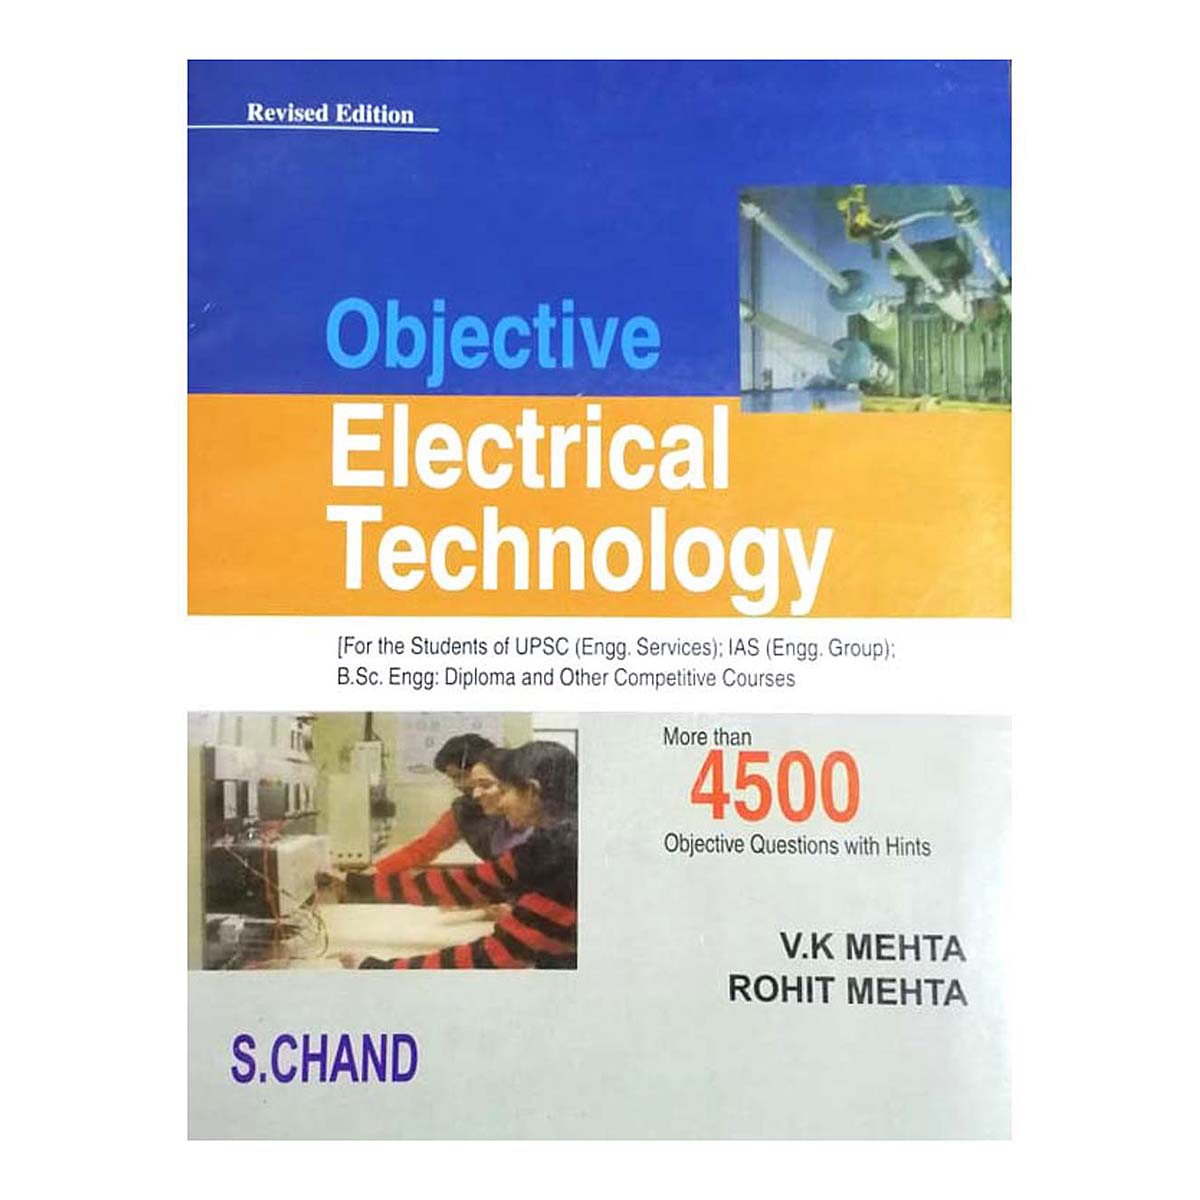 Objective Electrical Technotogy by VK MEHTA